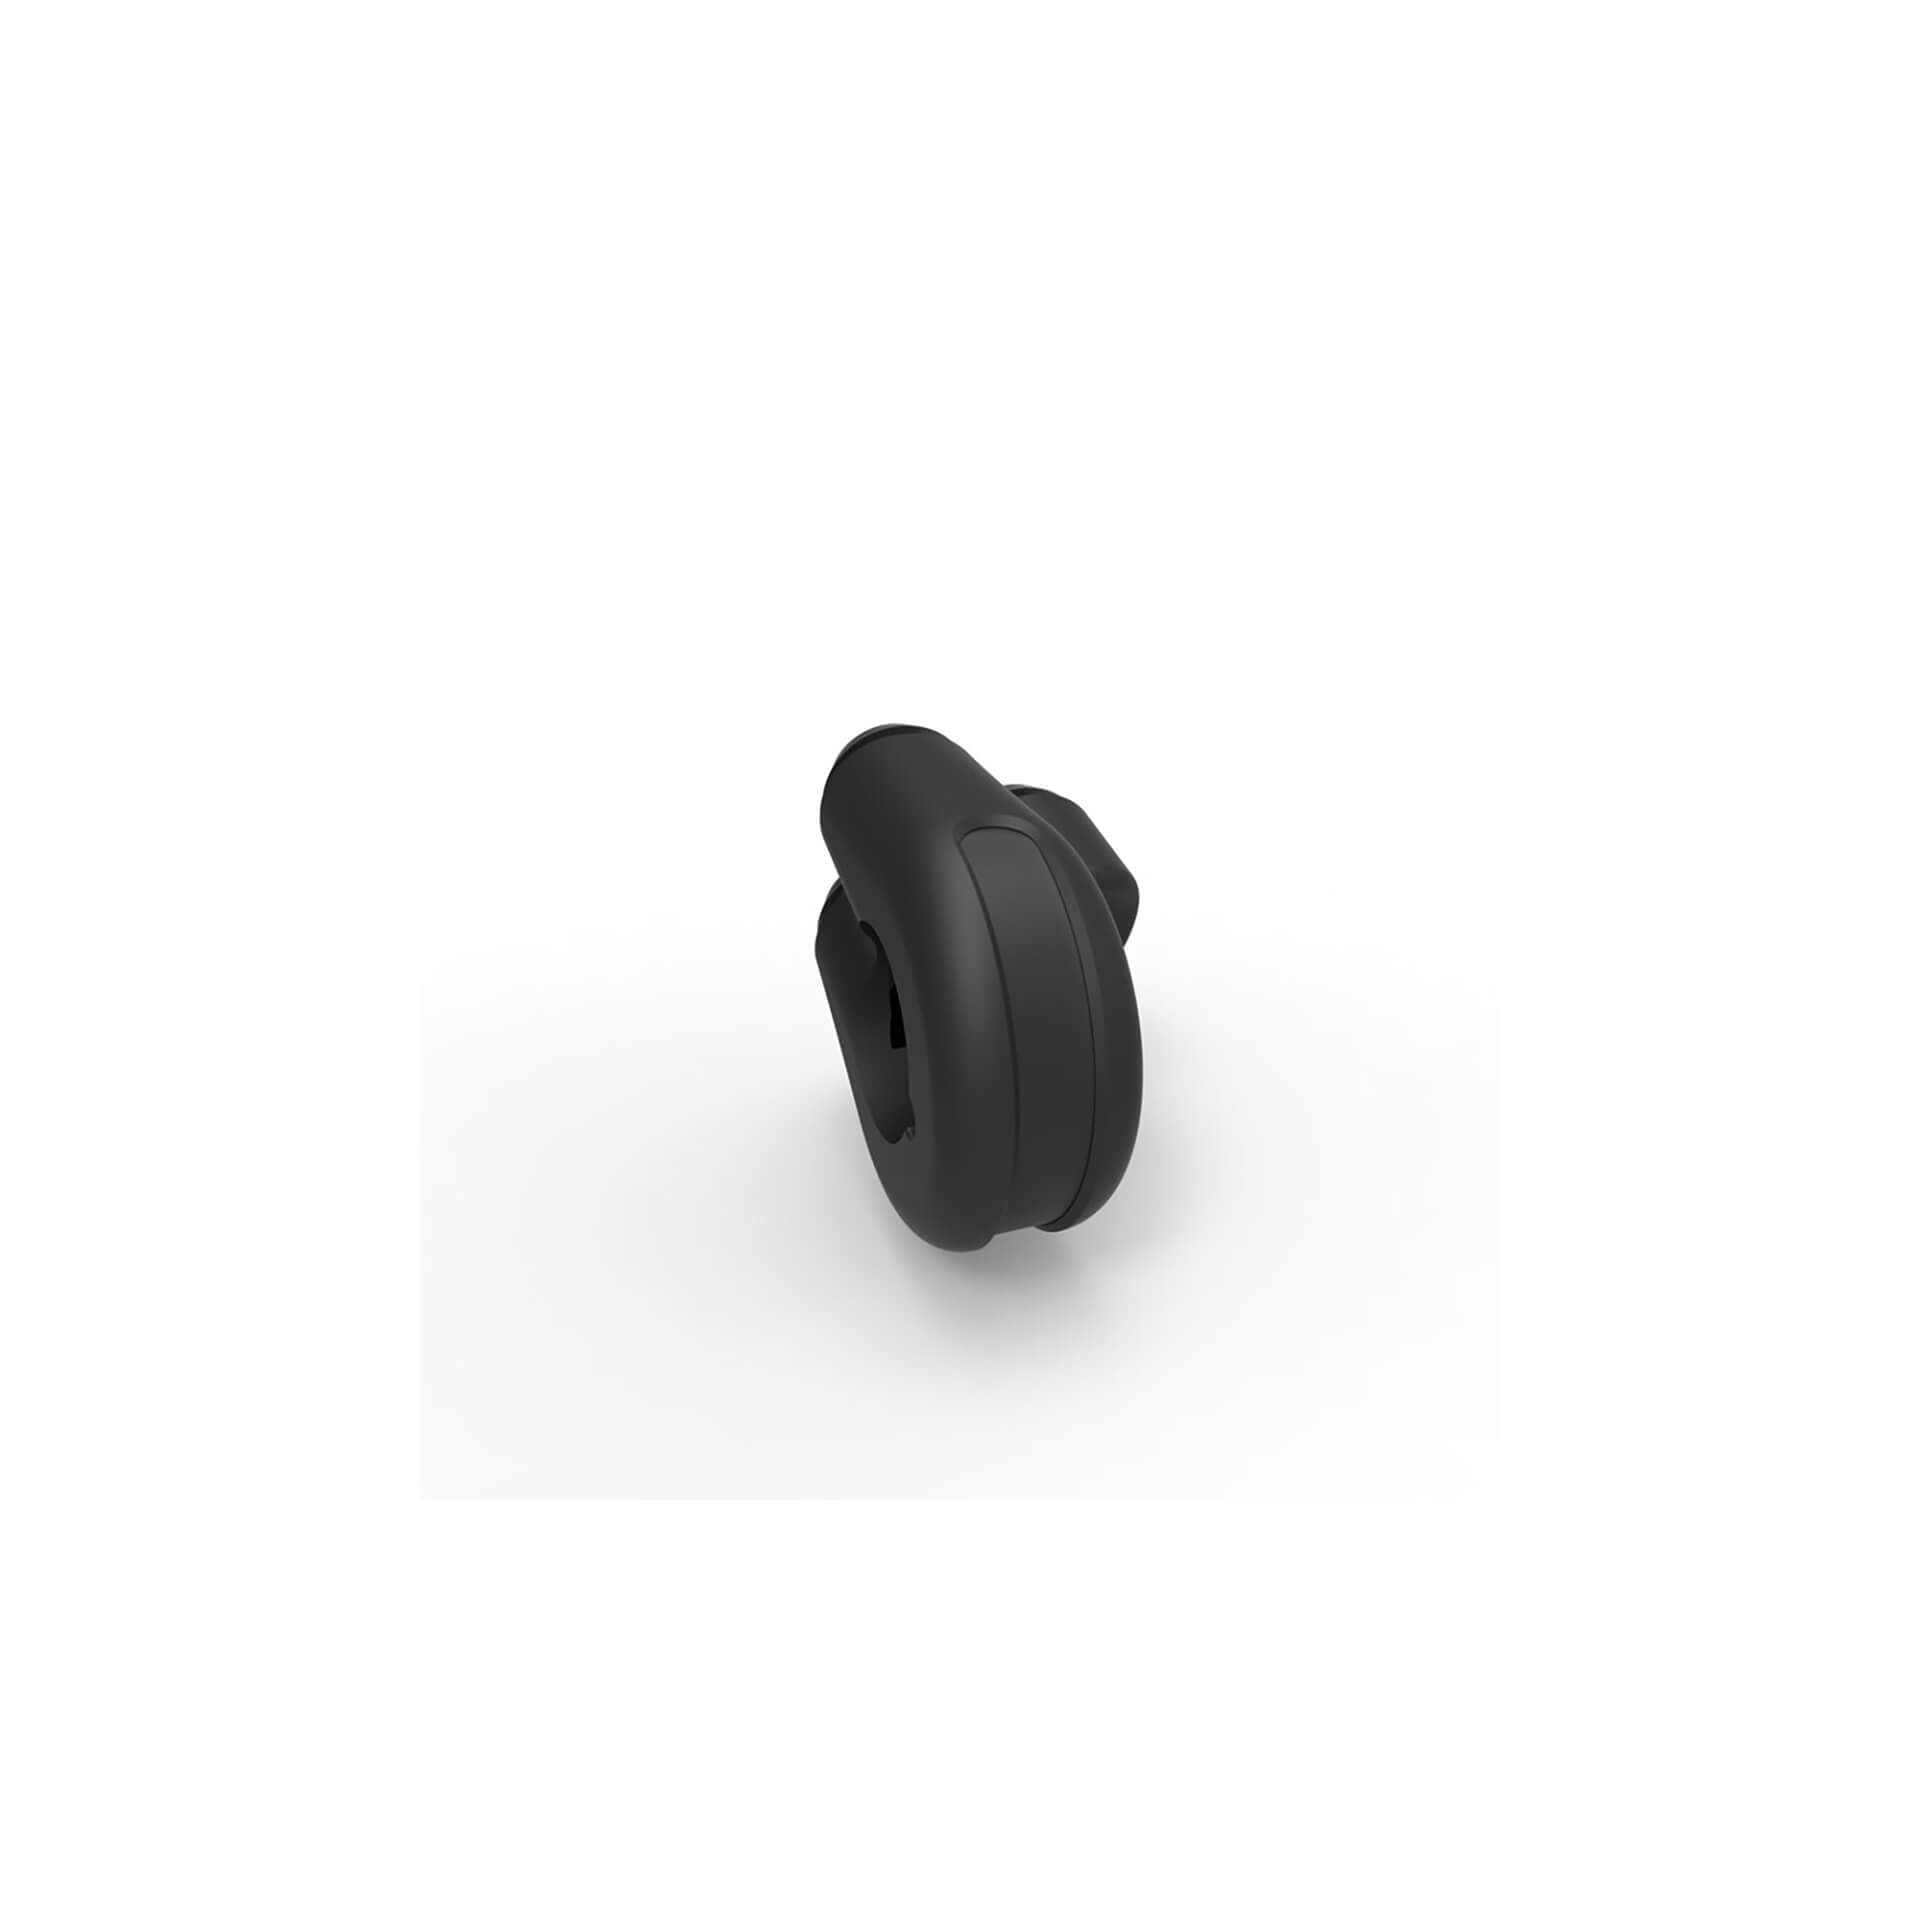 HIGHSIDER LED Nebelscheinwerfer FT13-FOG, schwarz, E-geprüft. - günstig  kaufen ▷ FC-Moto